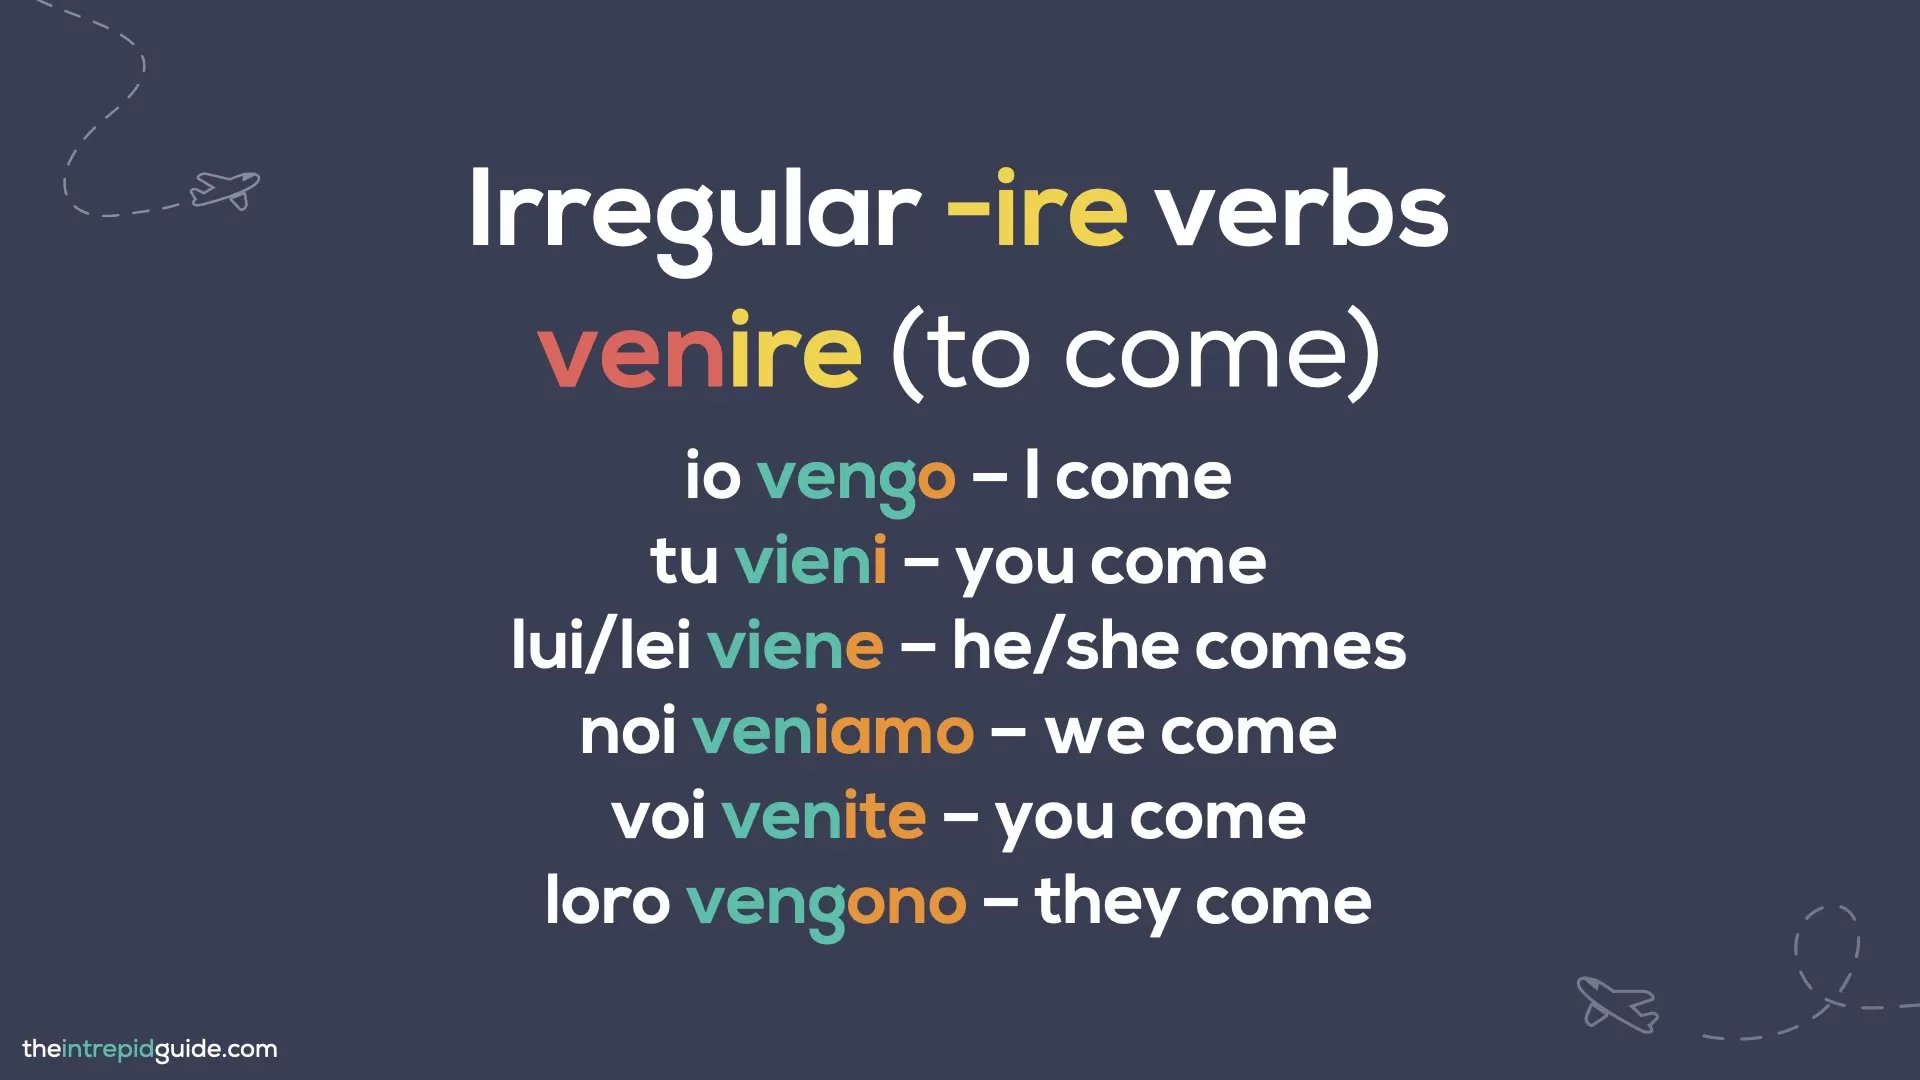 How to Conjugate Italian Verbs - Conjugating the verb venire - to come